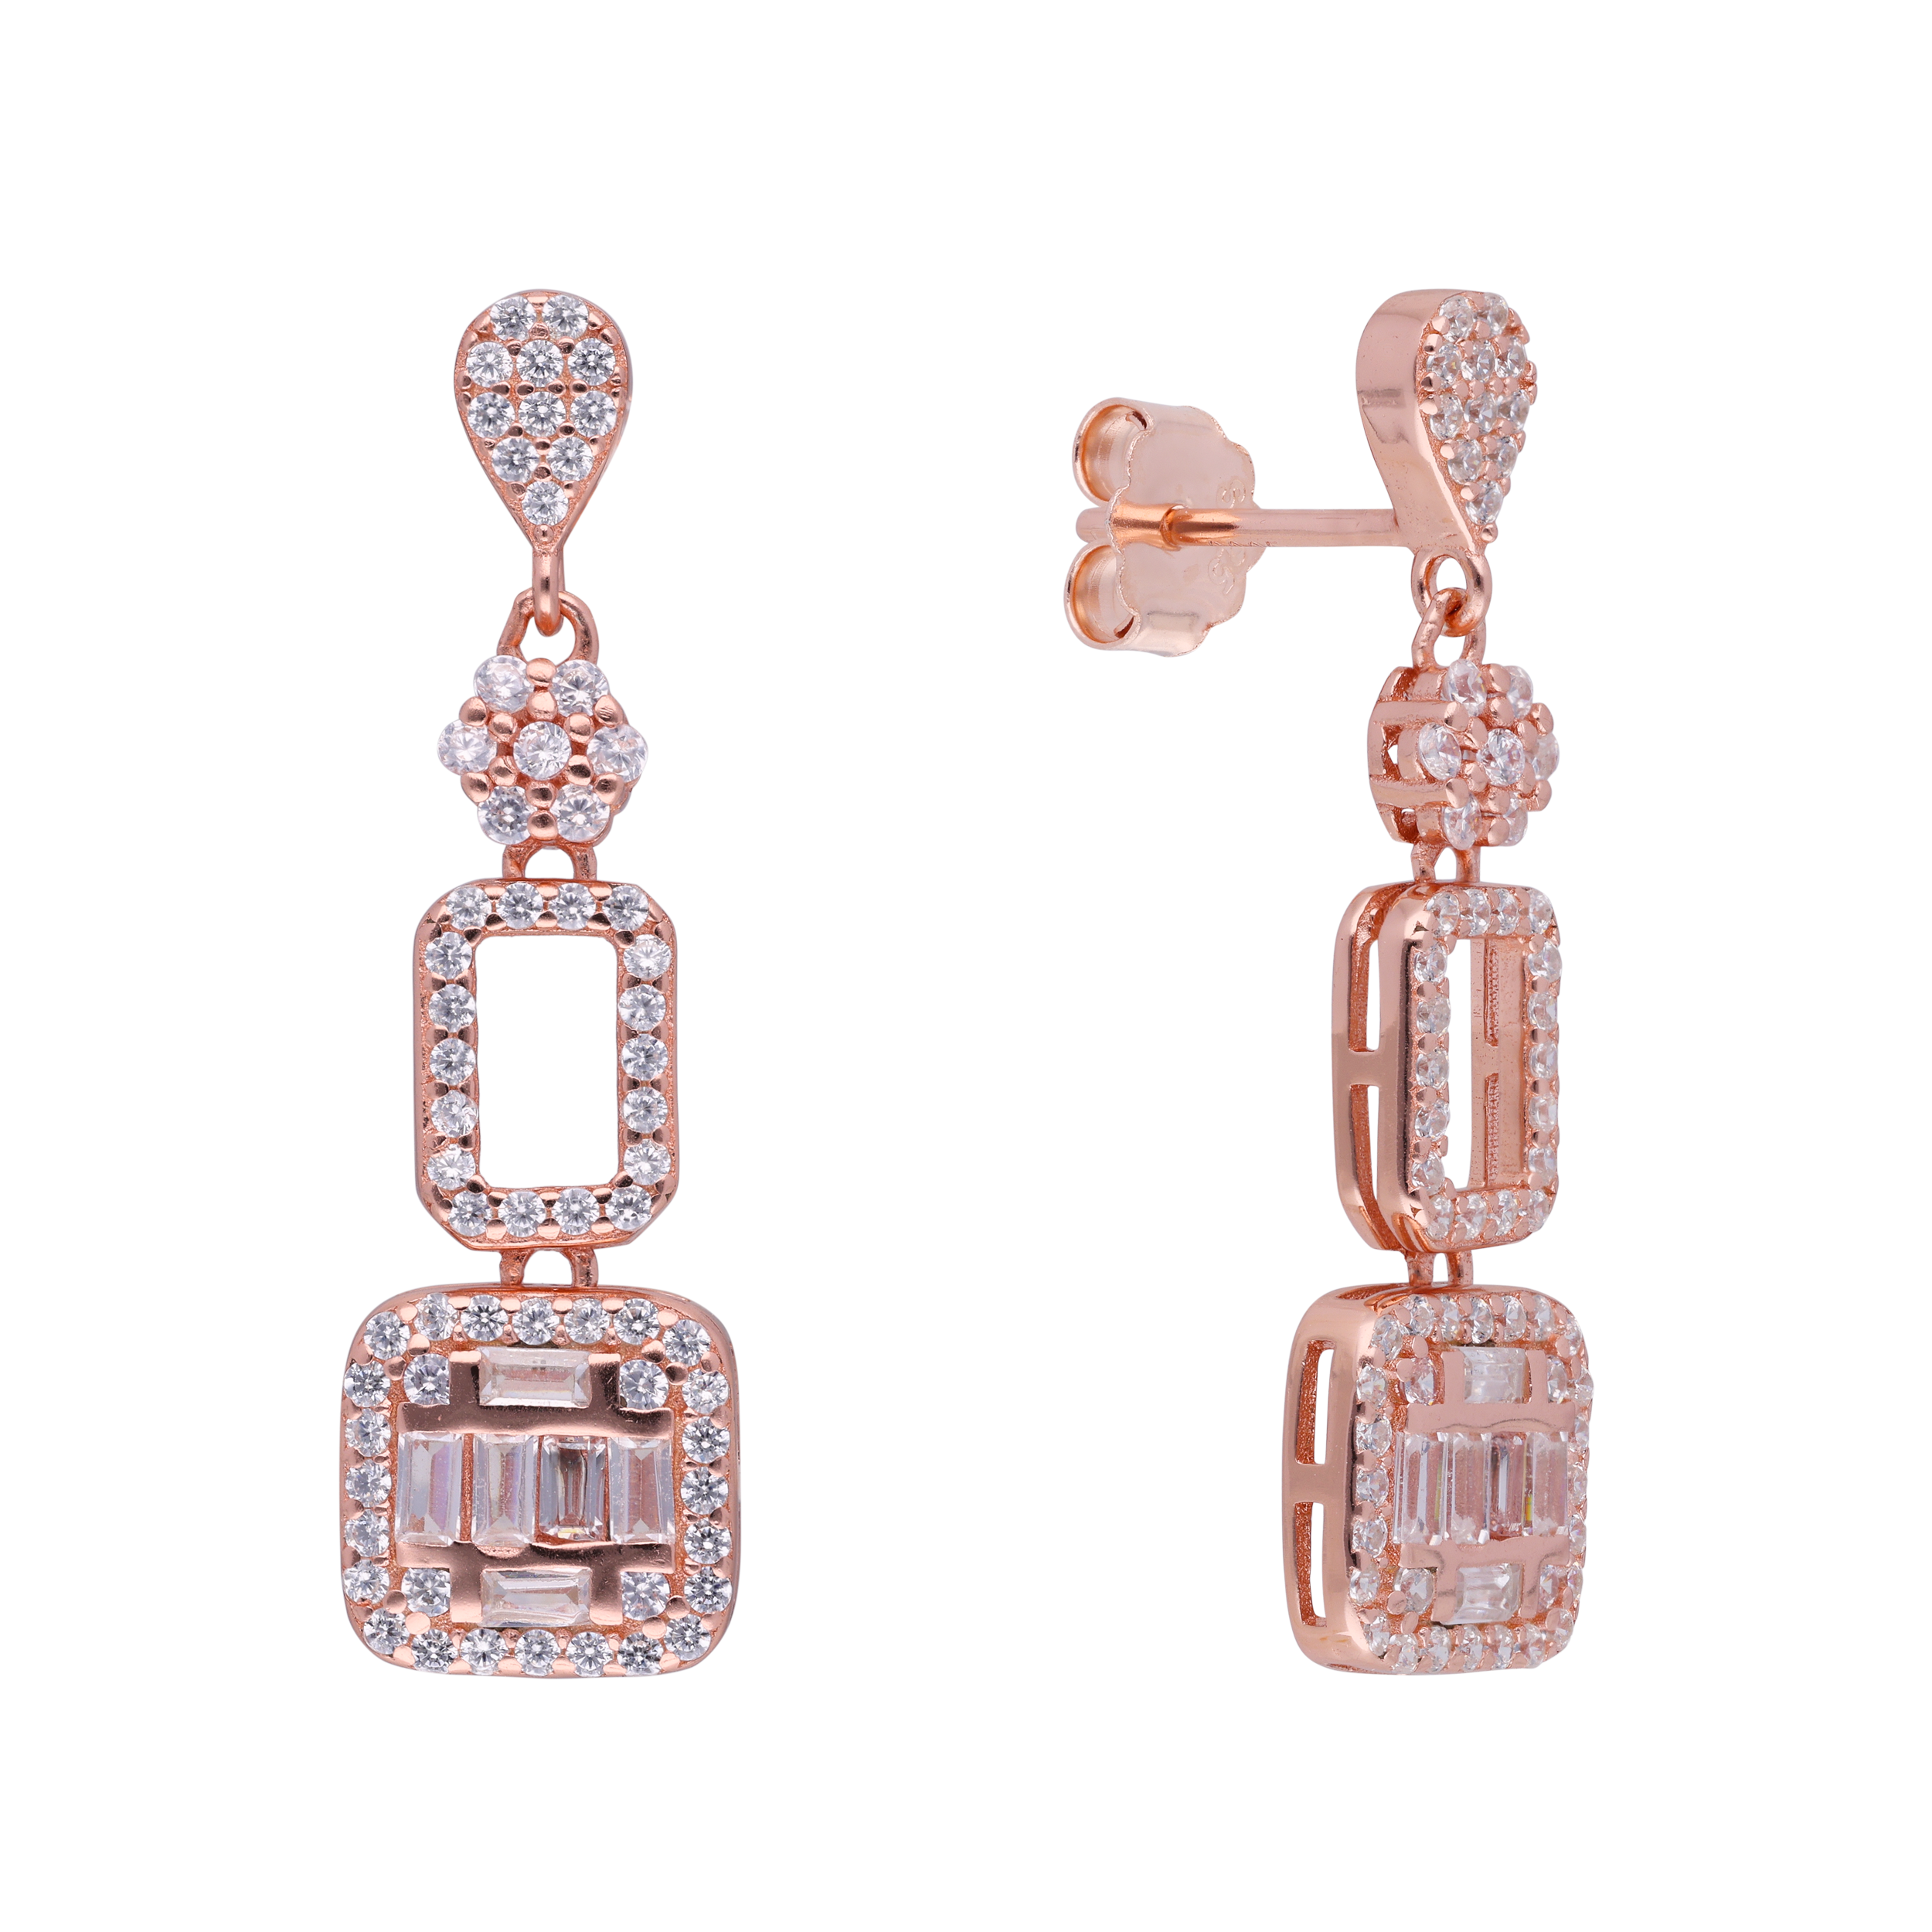 Designer Silver Royal Drop Earrings in Luxe Rose Gold | SKU: 0019281247, 0019280912, 0019280950